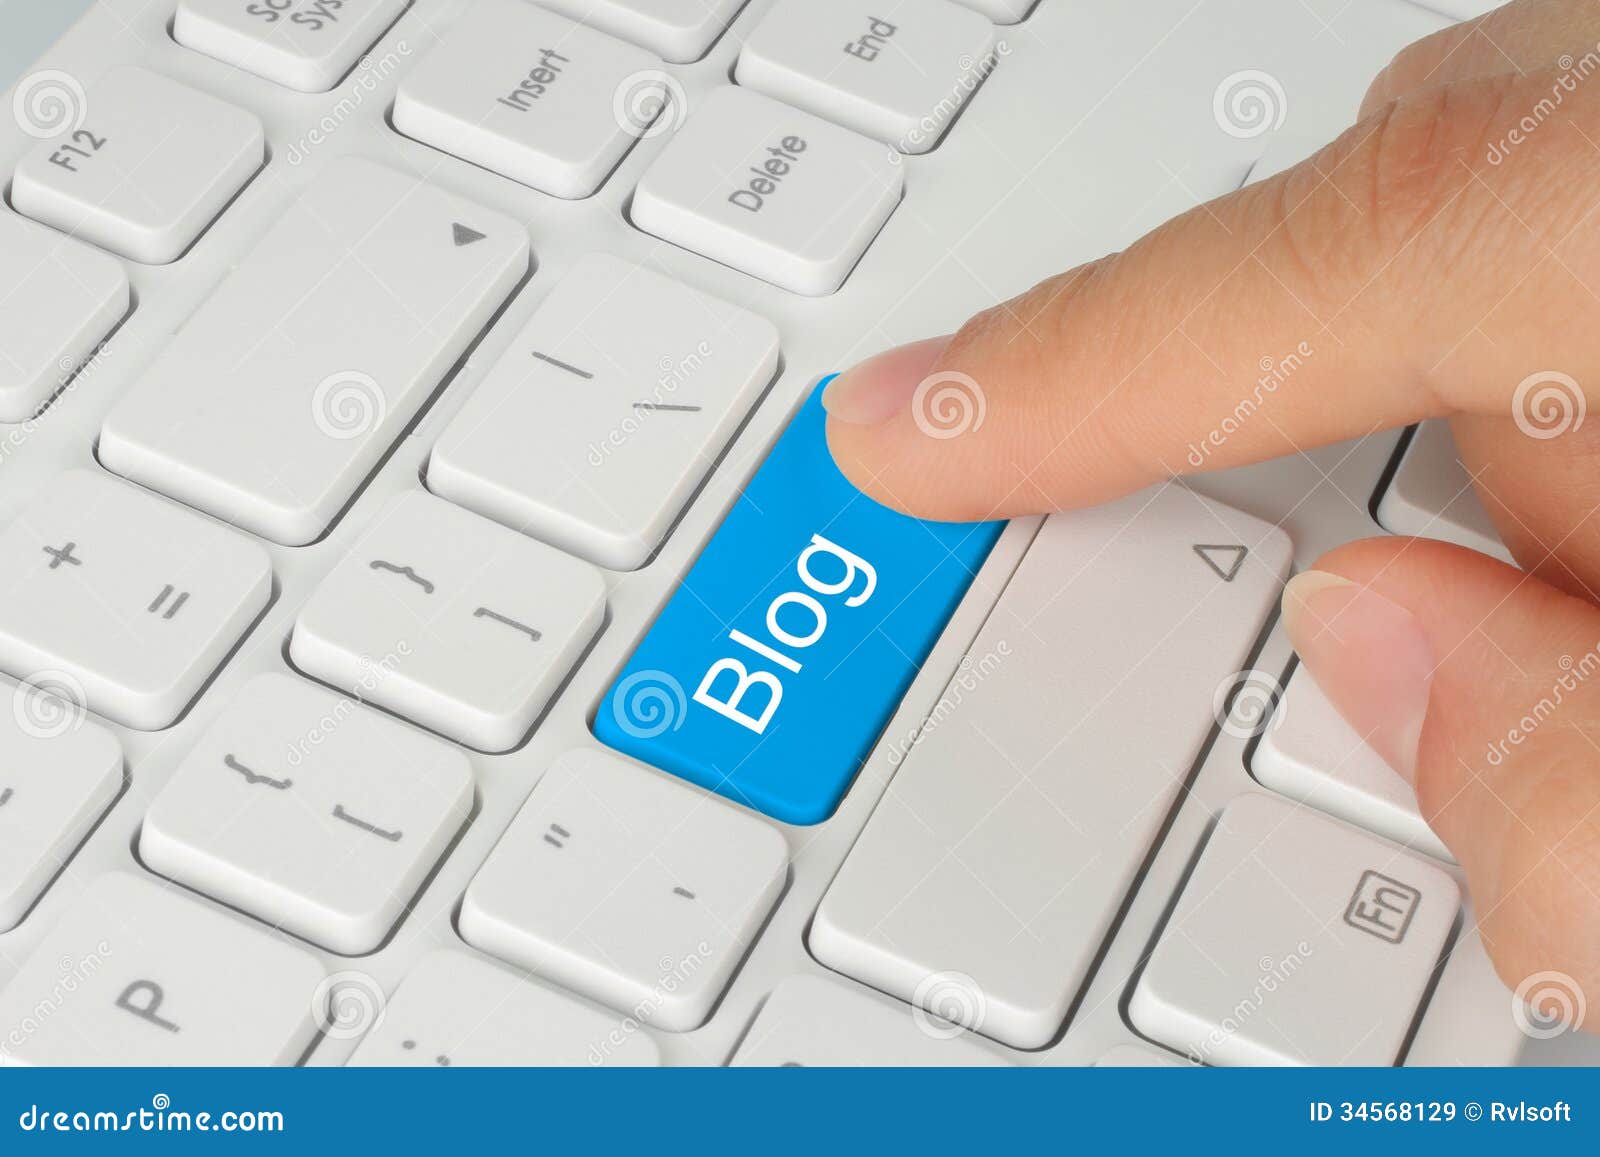 hand pushing blue blog button